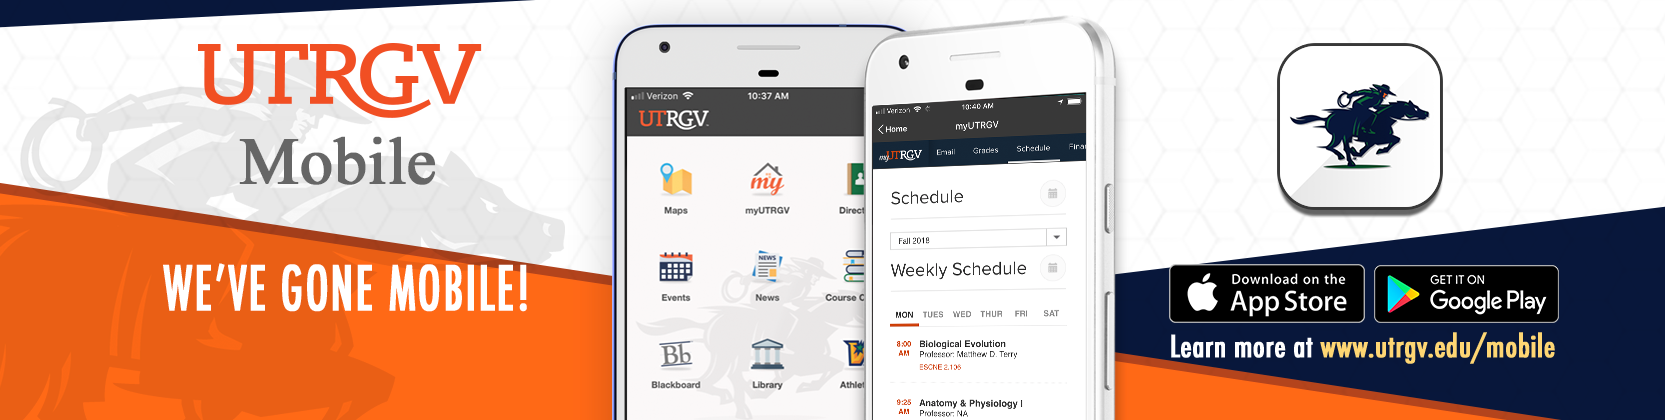 UTRGV Mobile App